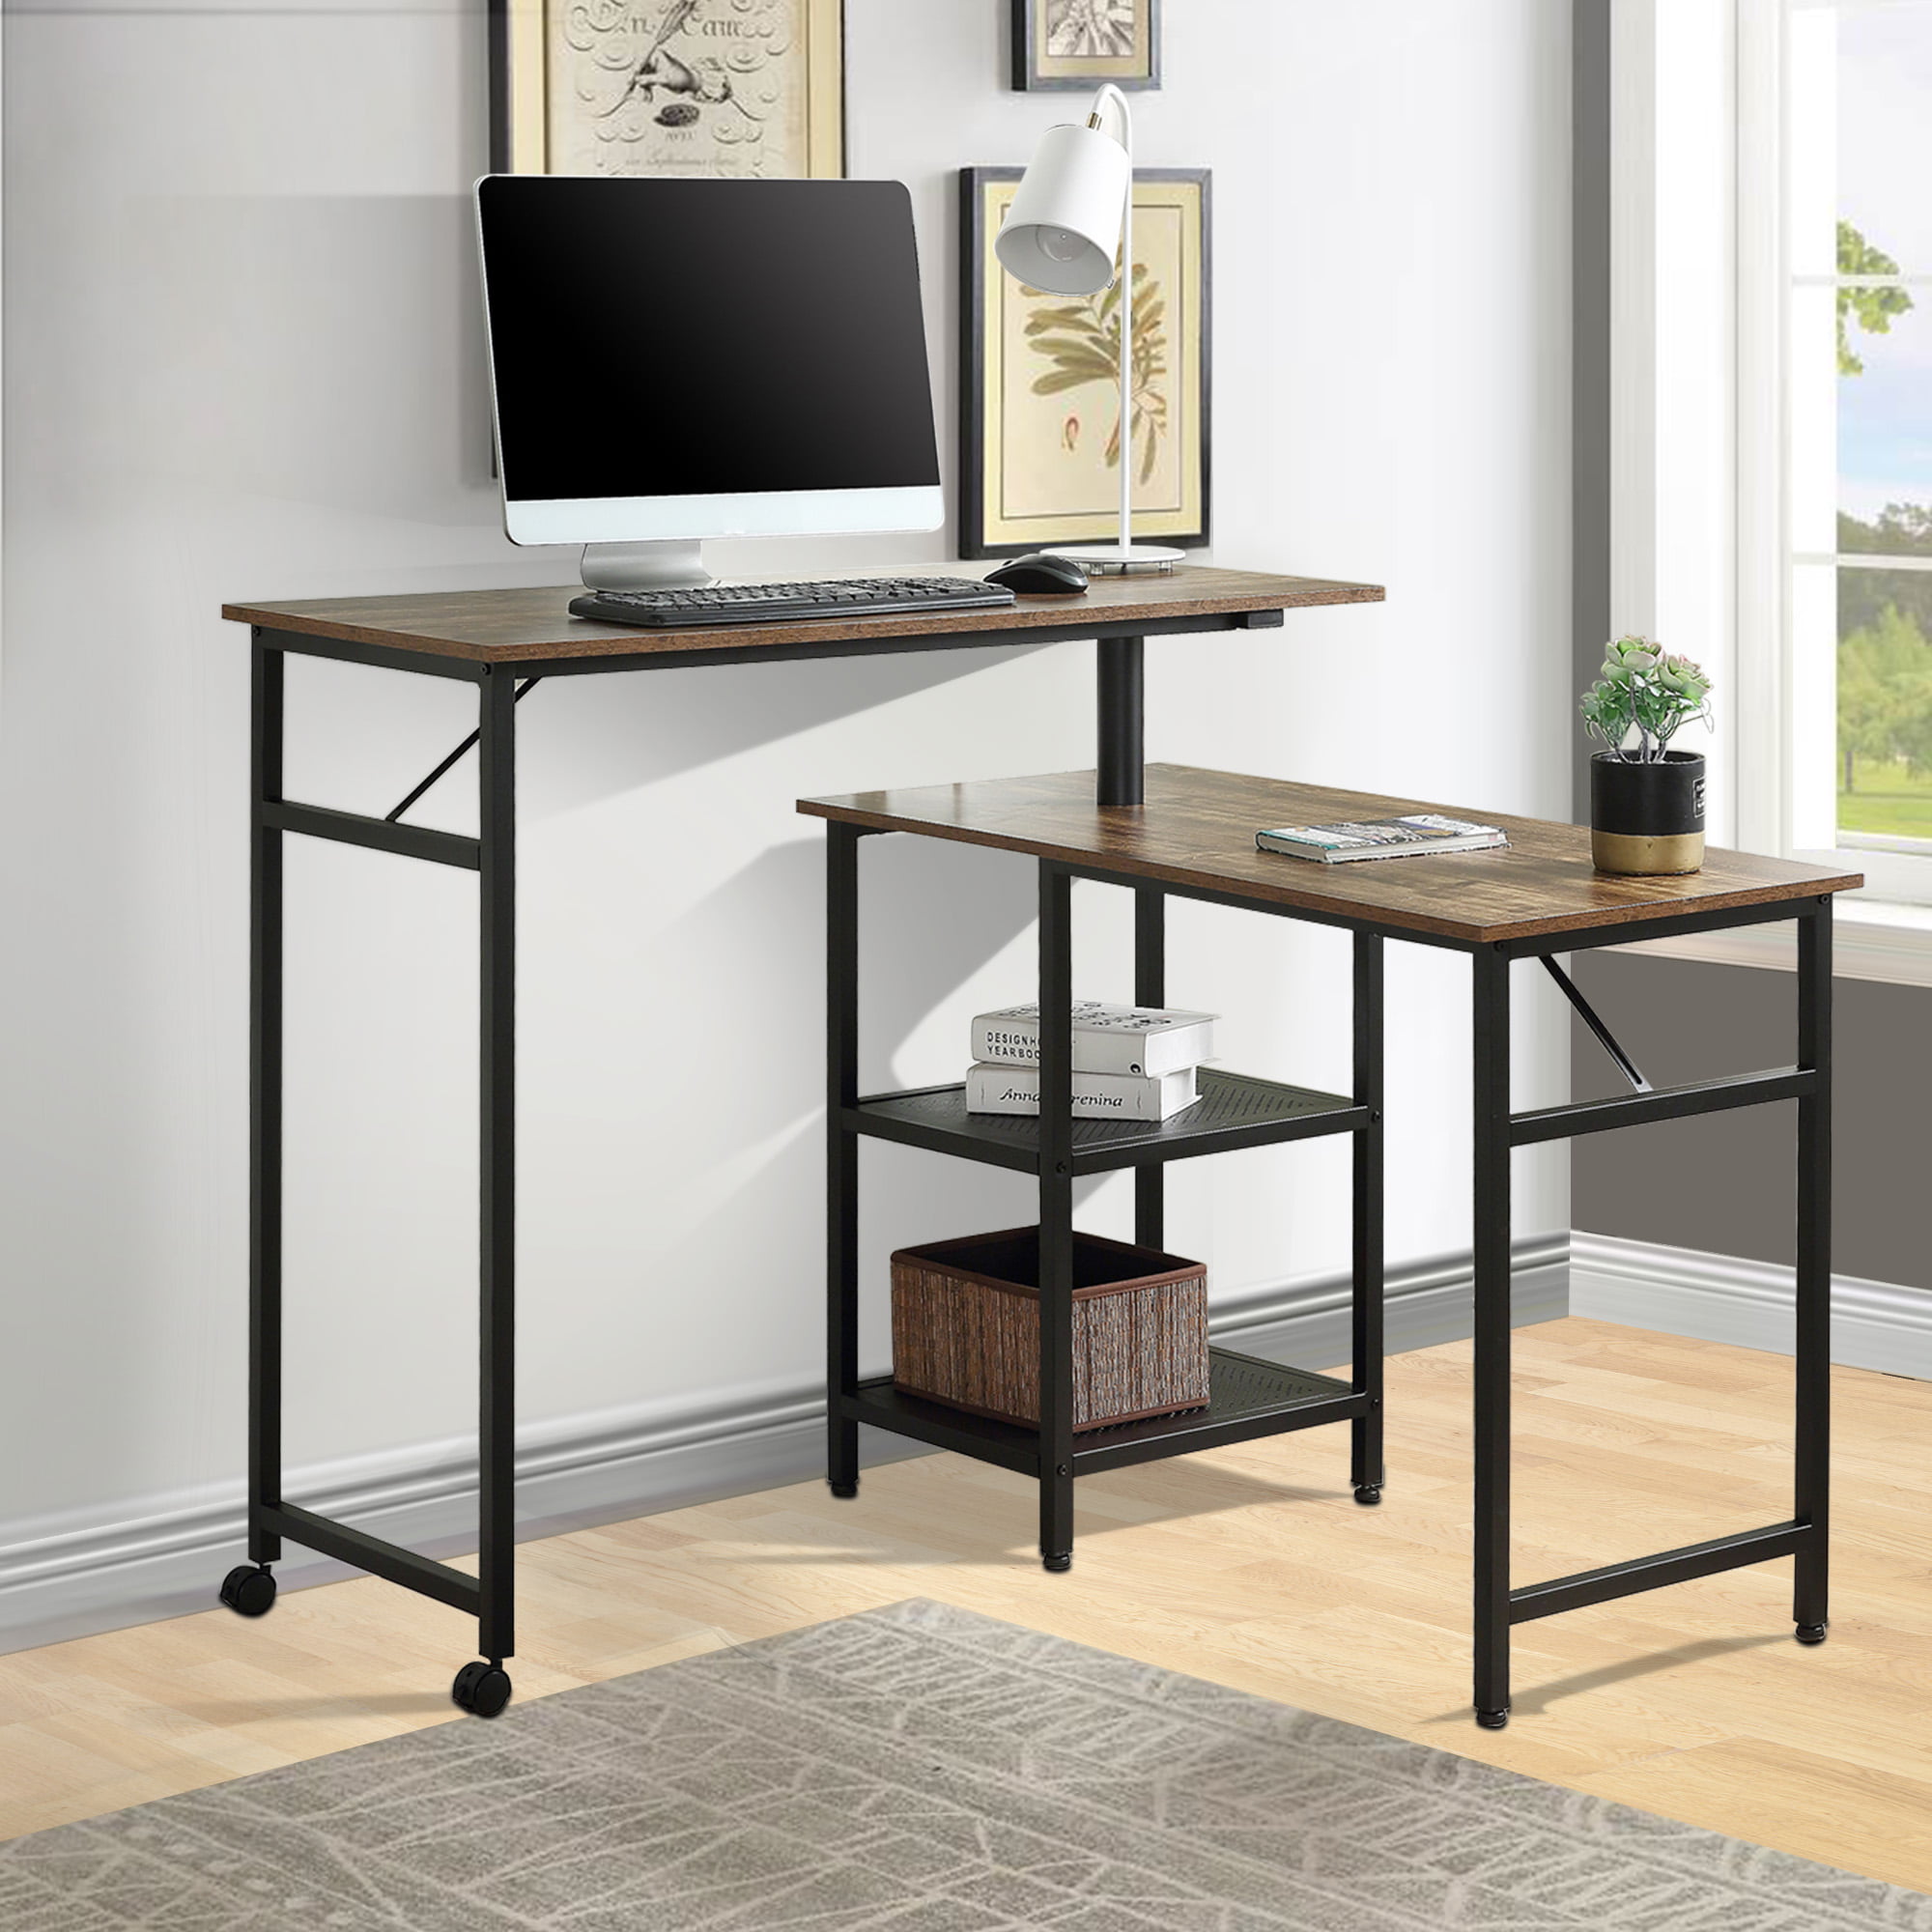 H-Shape Computer PC Laptop Table Corner Desk MDF Stand Study W/ Storage Shelves 